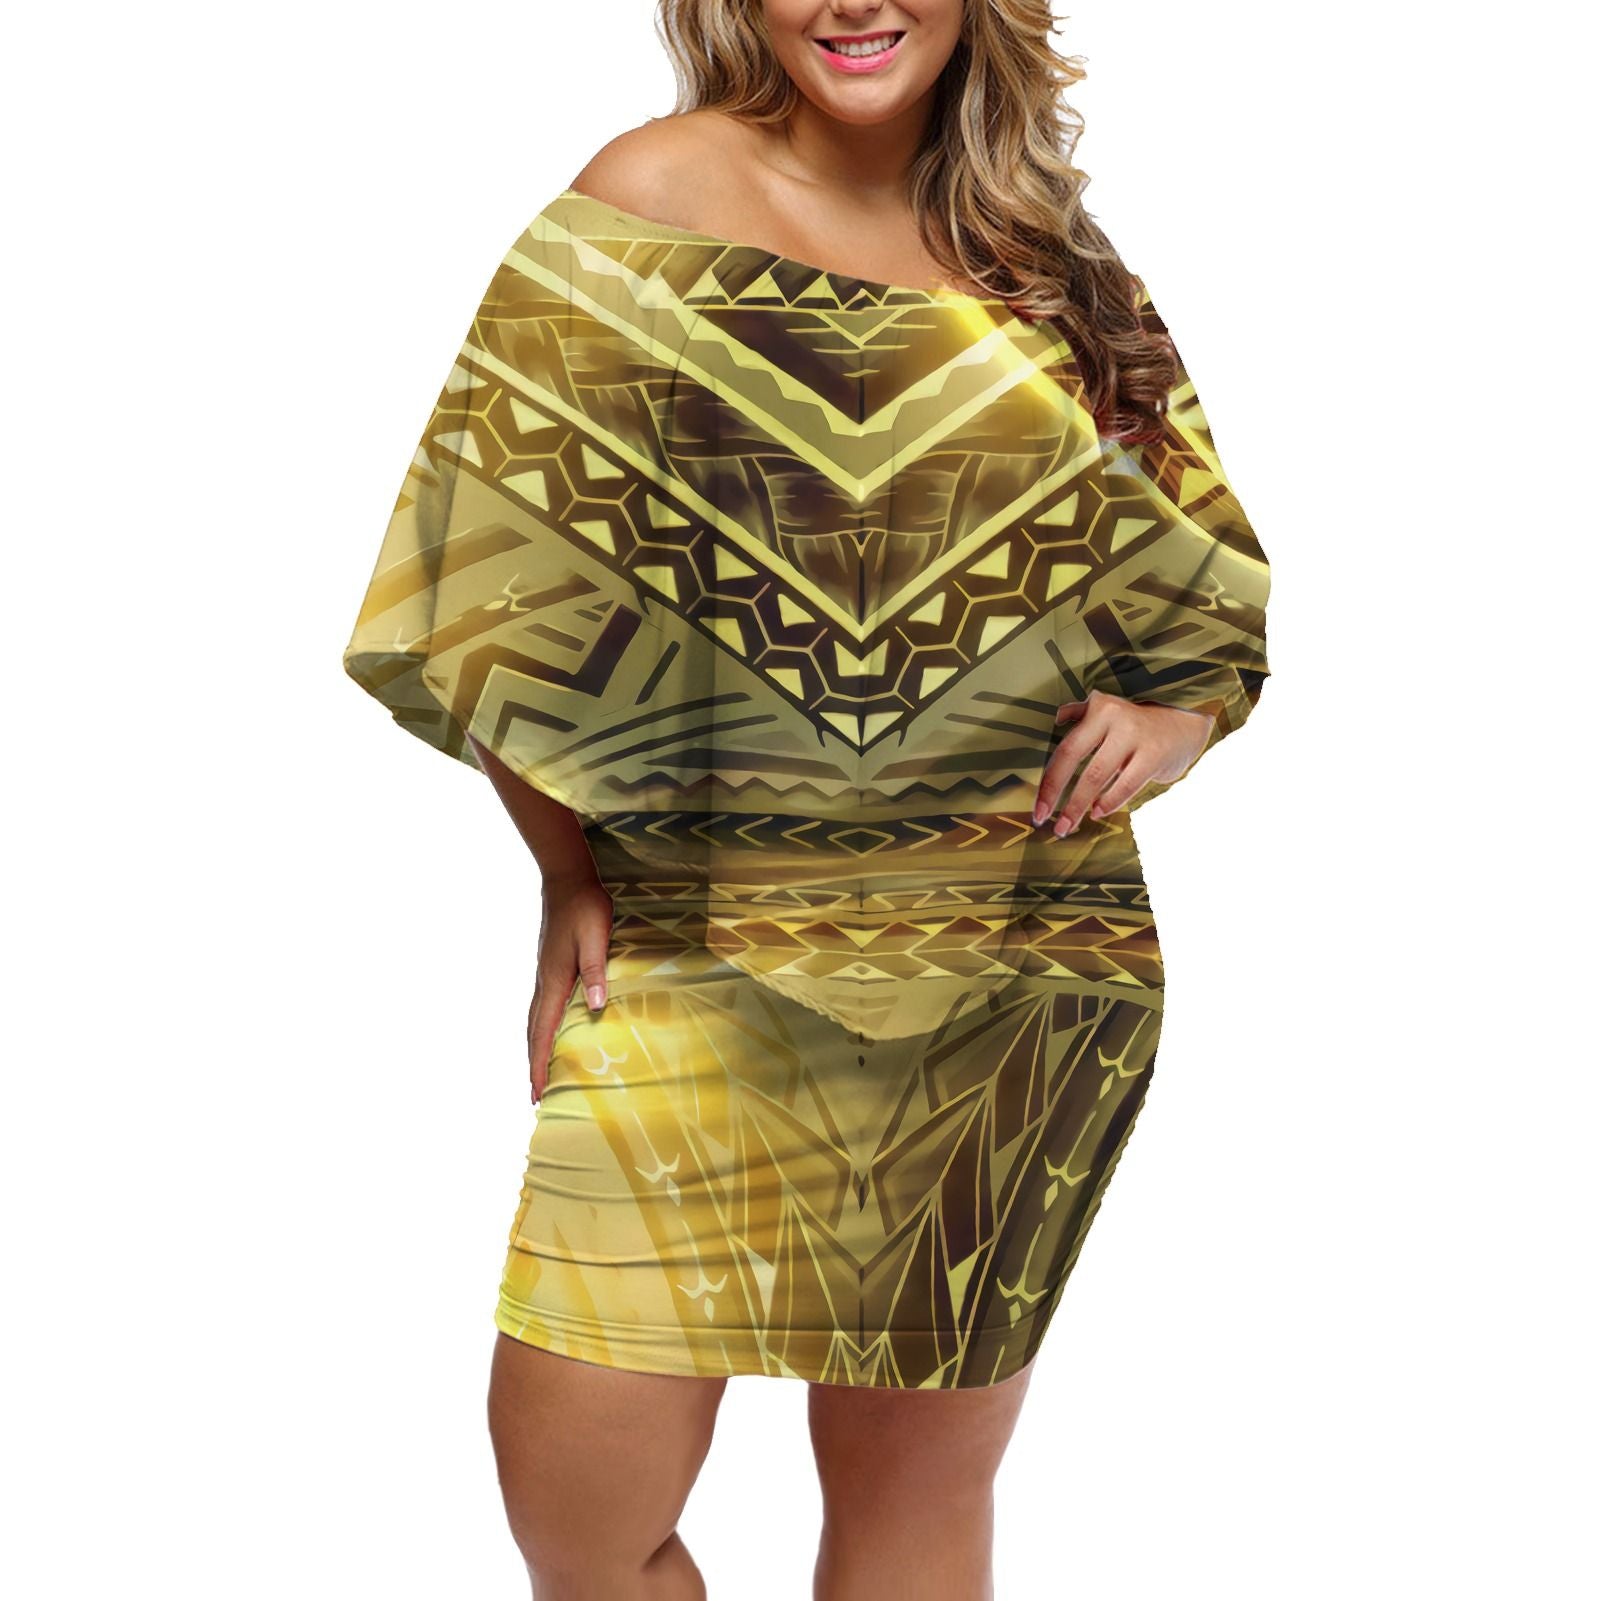 Polynesian Pride Dress - Polynesian Triangle Golden Off Shoulder Short Dress Women Gold - Polynesian Pride